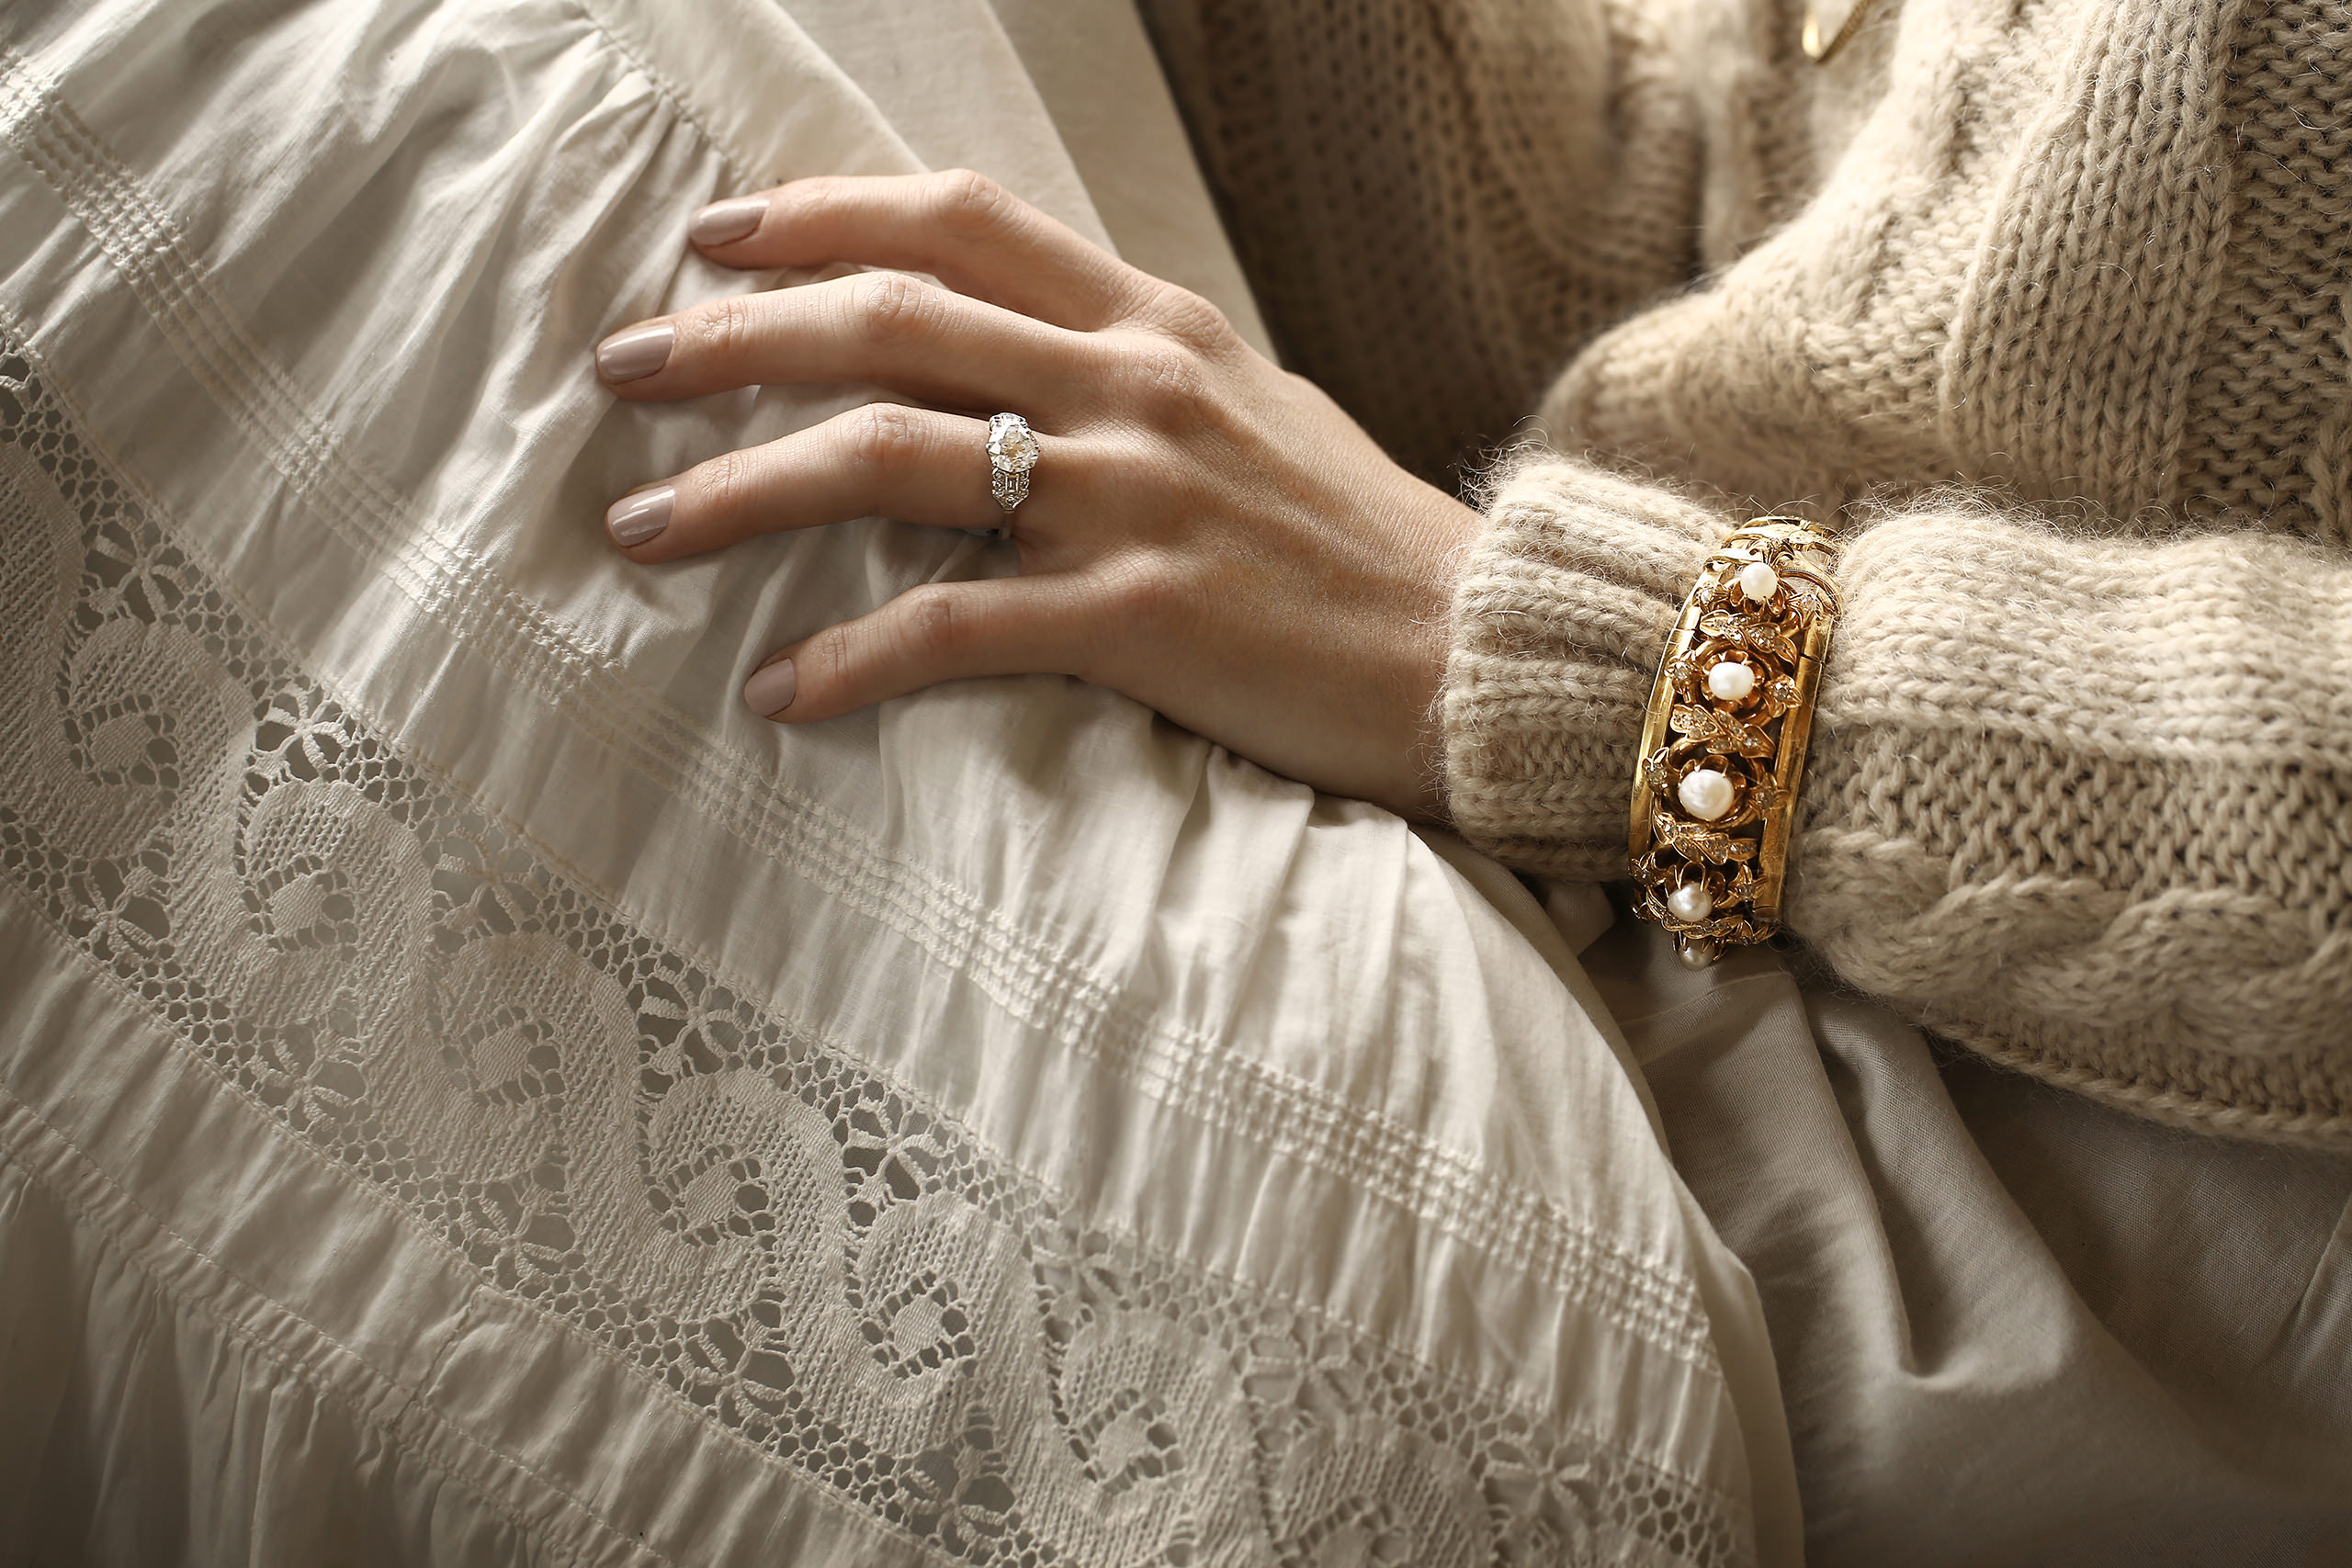 Zara Prassinot wearing antique and vintage jewellery